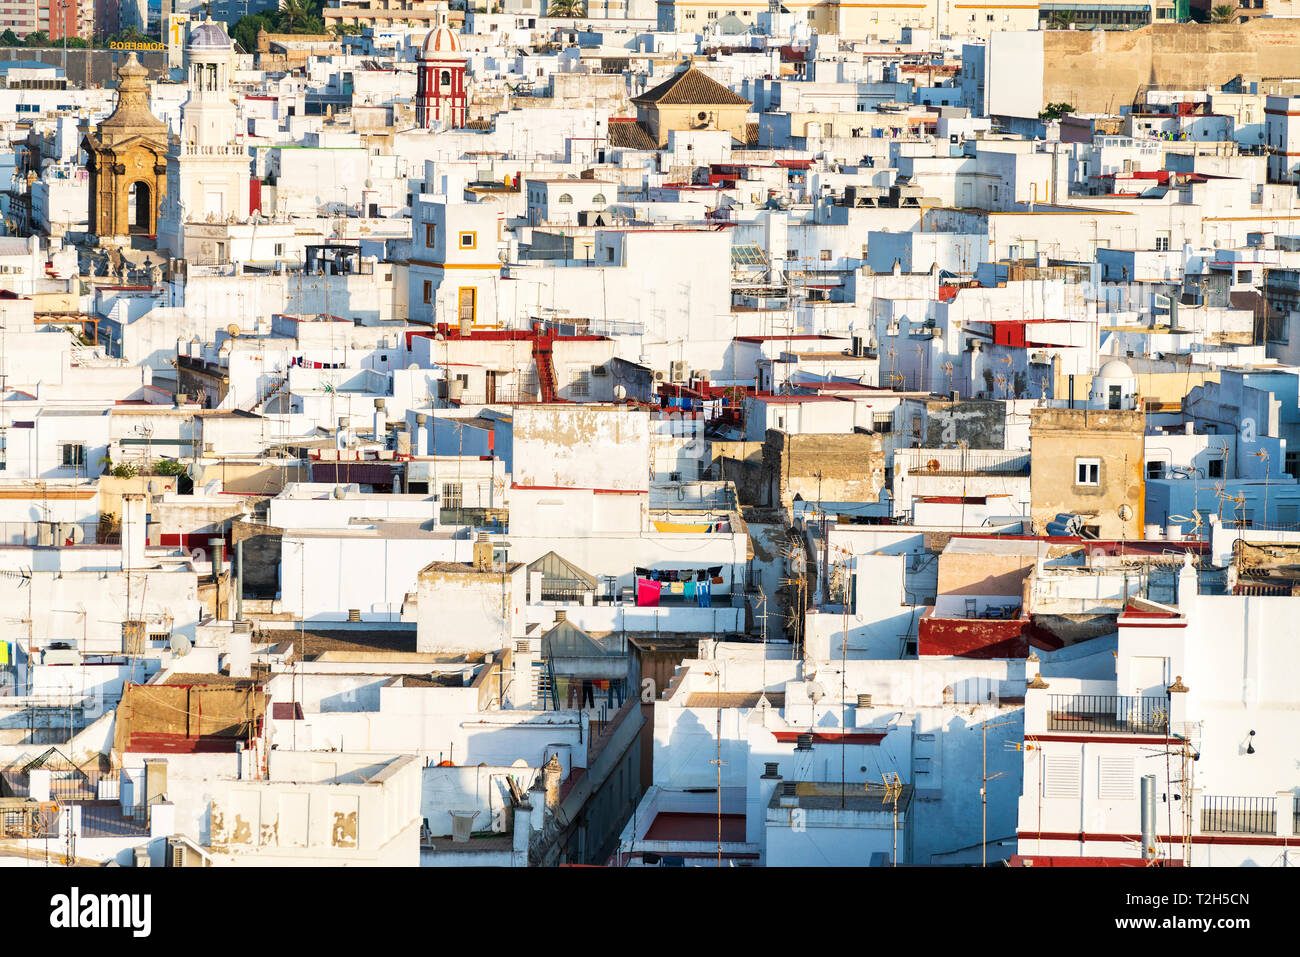 Vista dalla Torre Tavira di case bianche a Cadice, Spagna, Europa Foto Stock